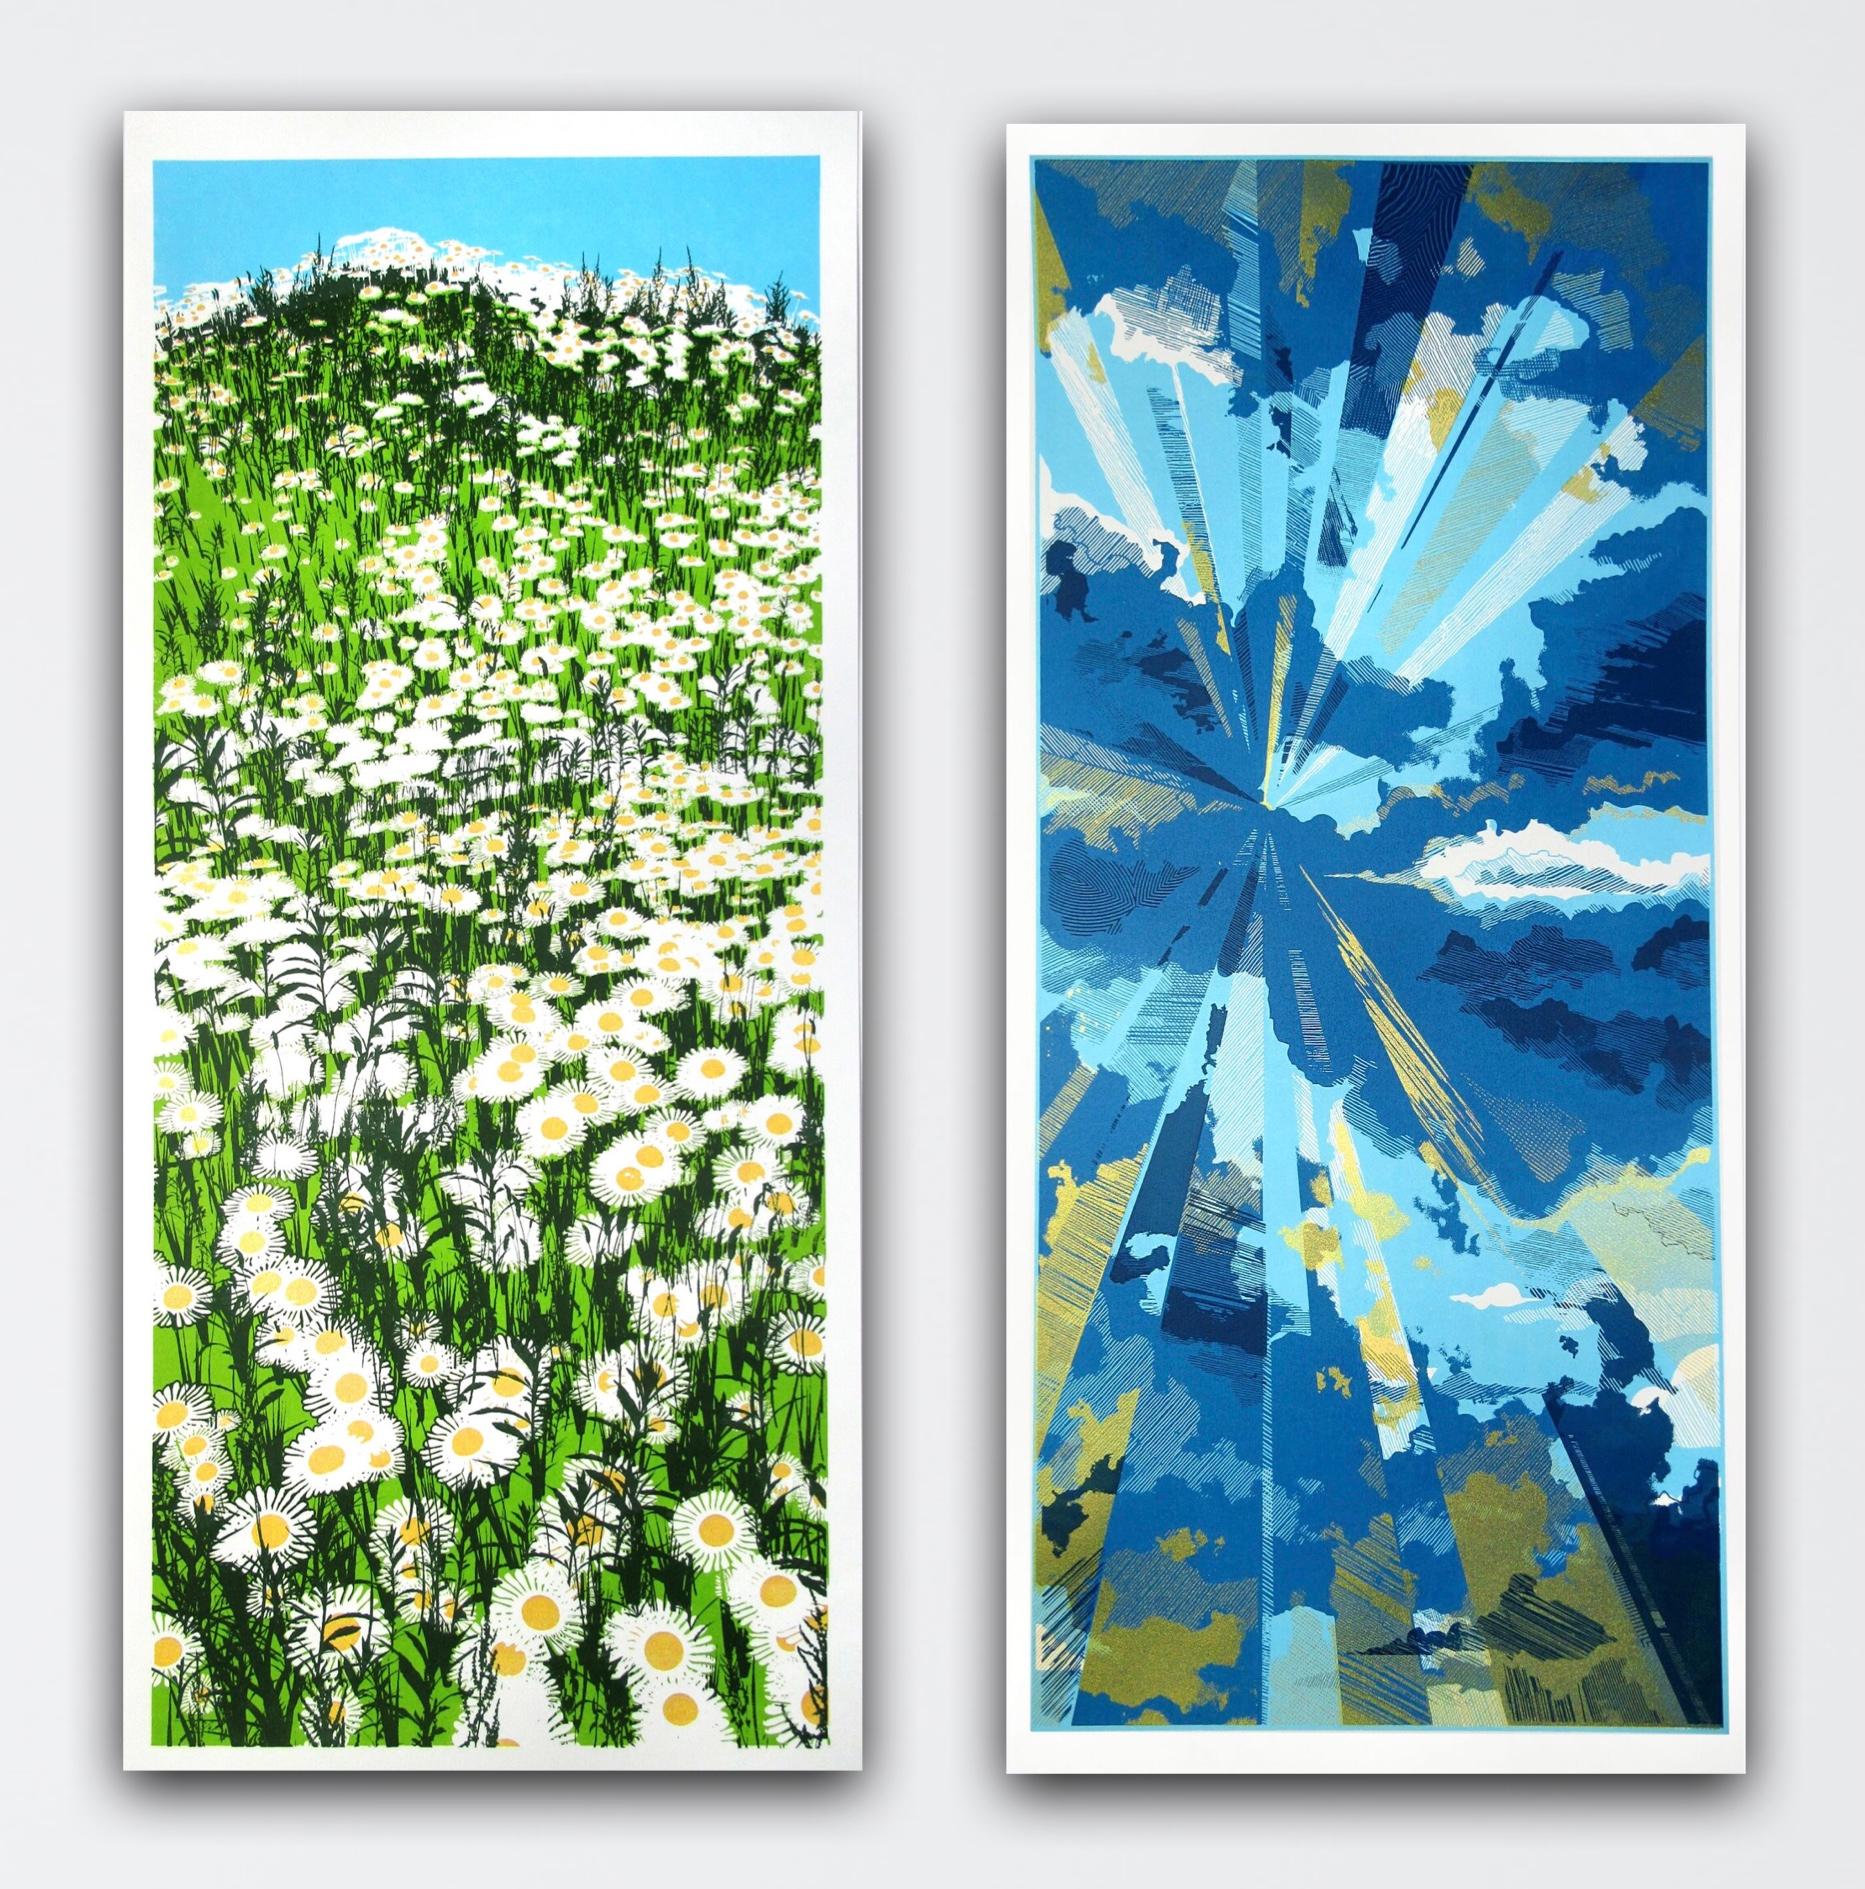 Chris Keegan Landscape Print - Cloudburst and Daisy Field diptych